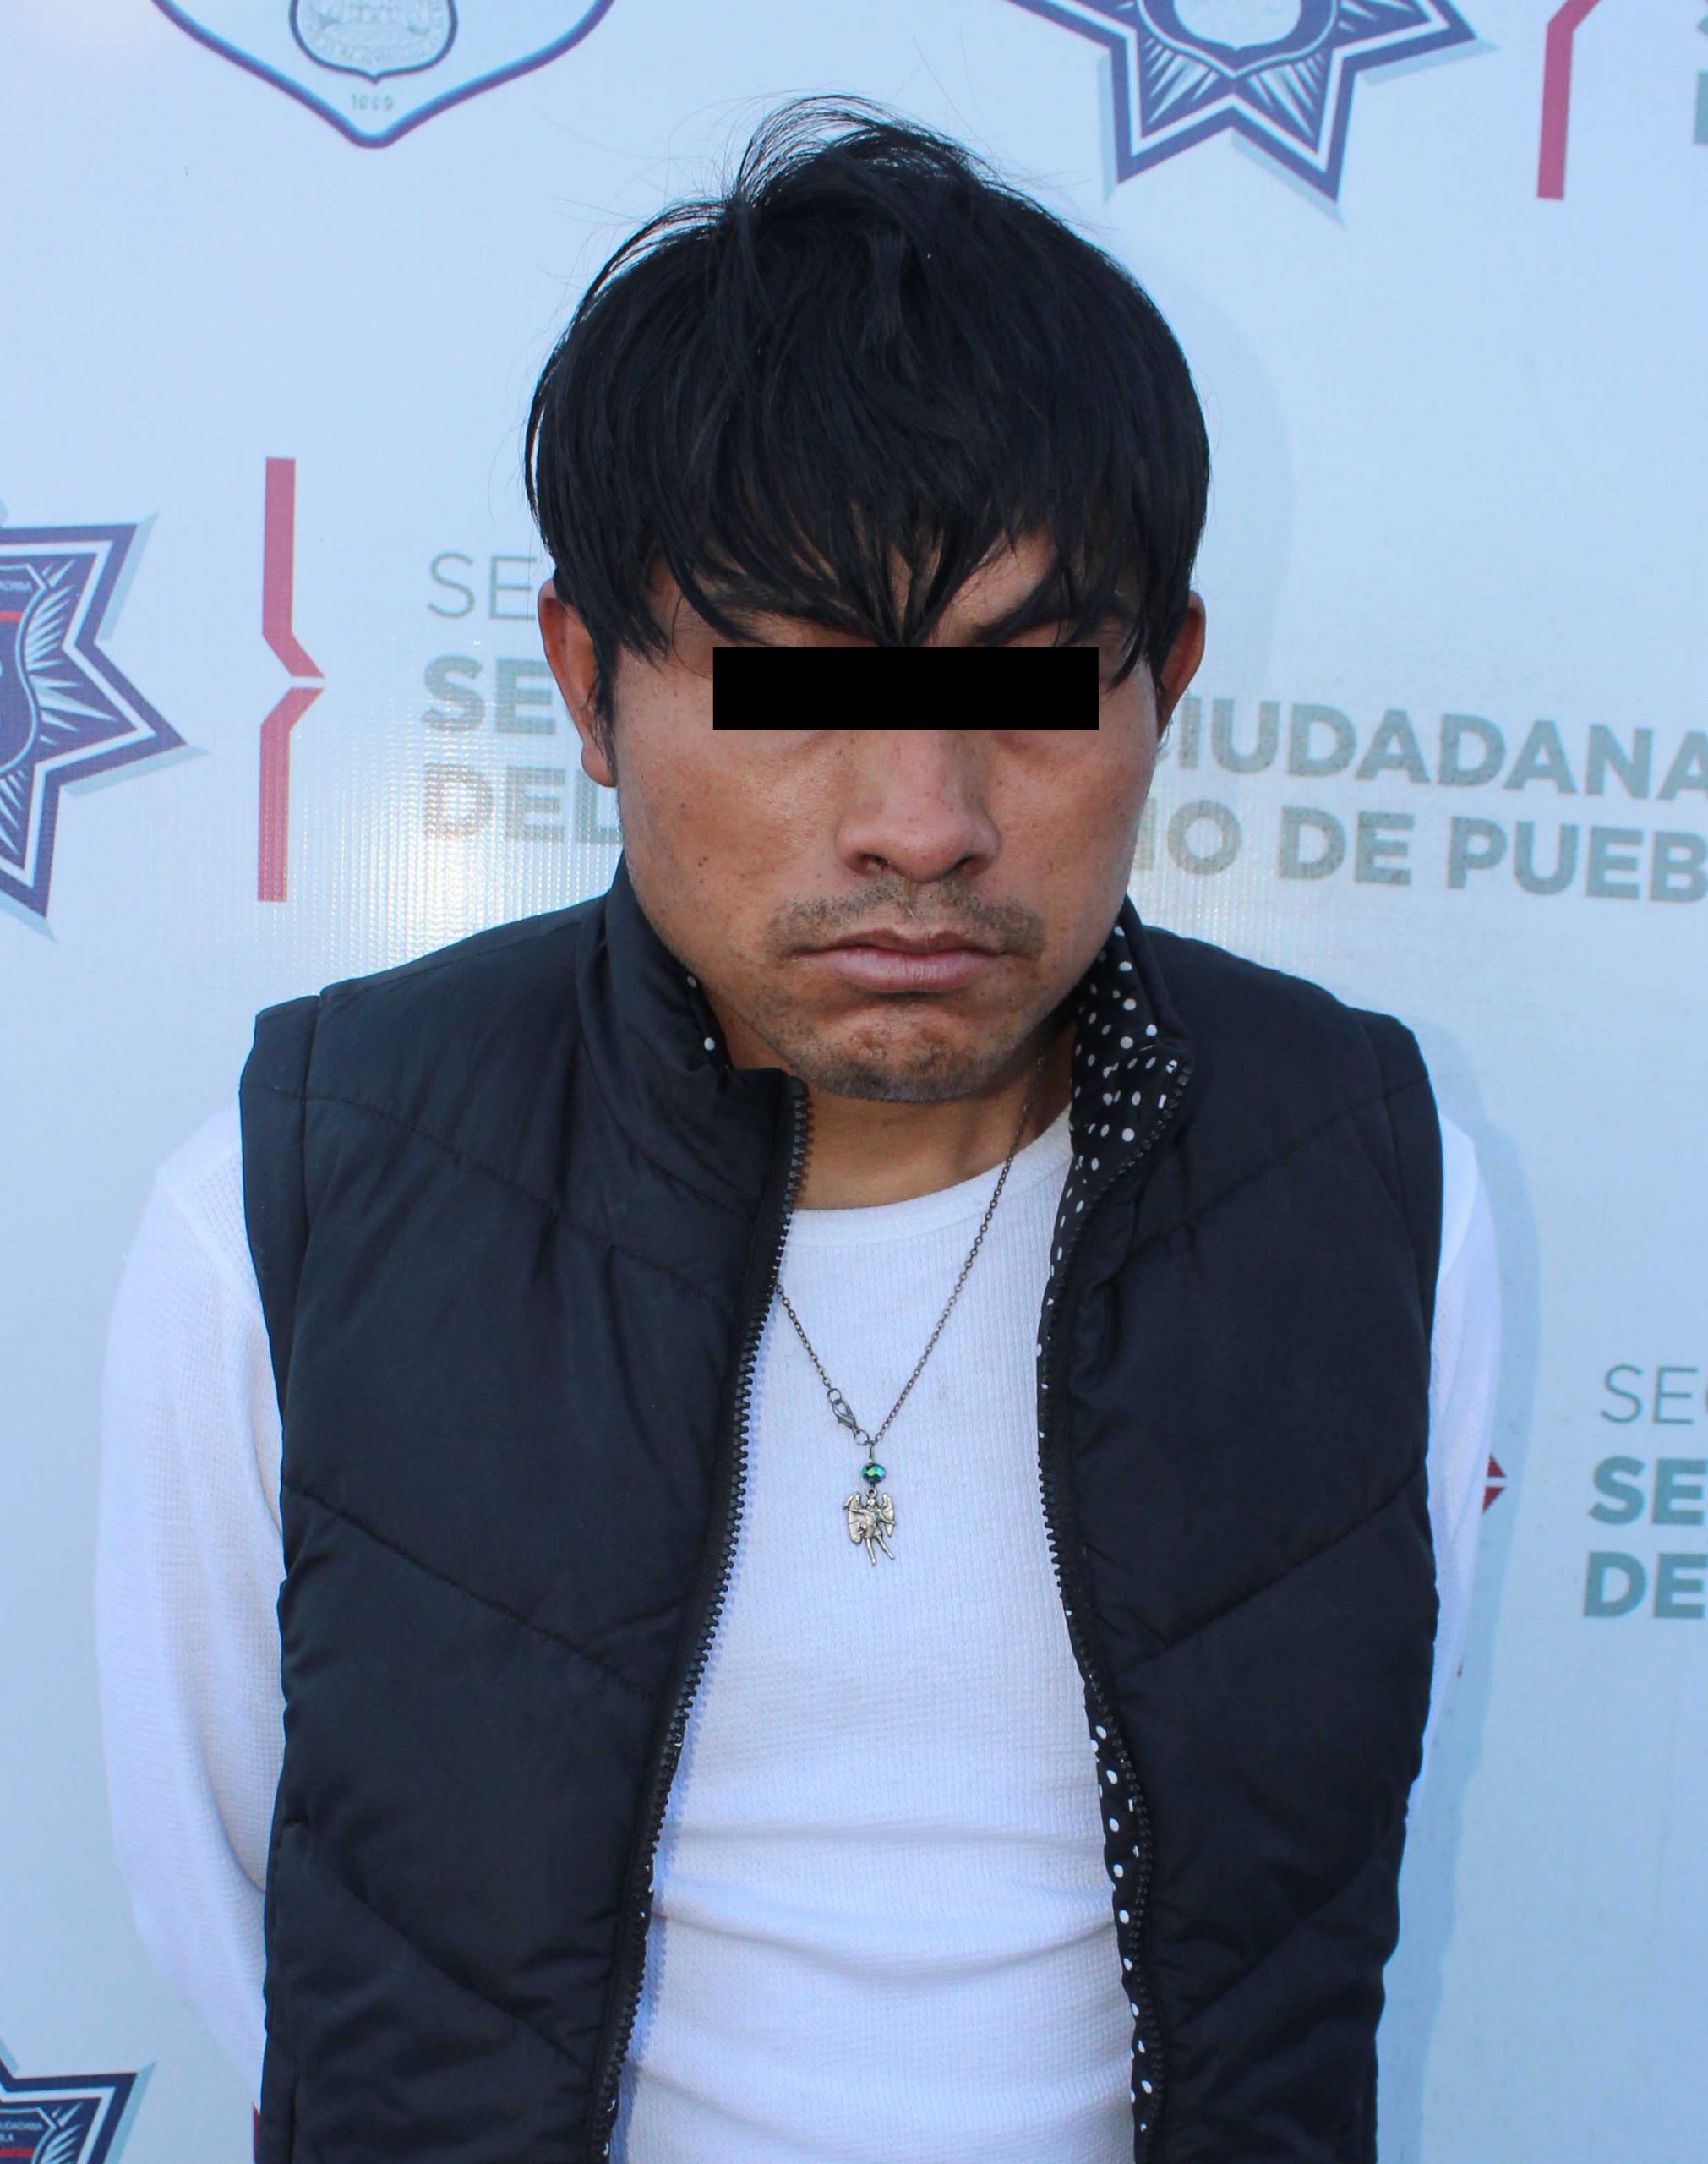 En acción inmediata detuvo Policía Municipal de Puebla a hombre por robo a casa habitación.